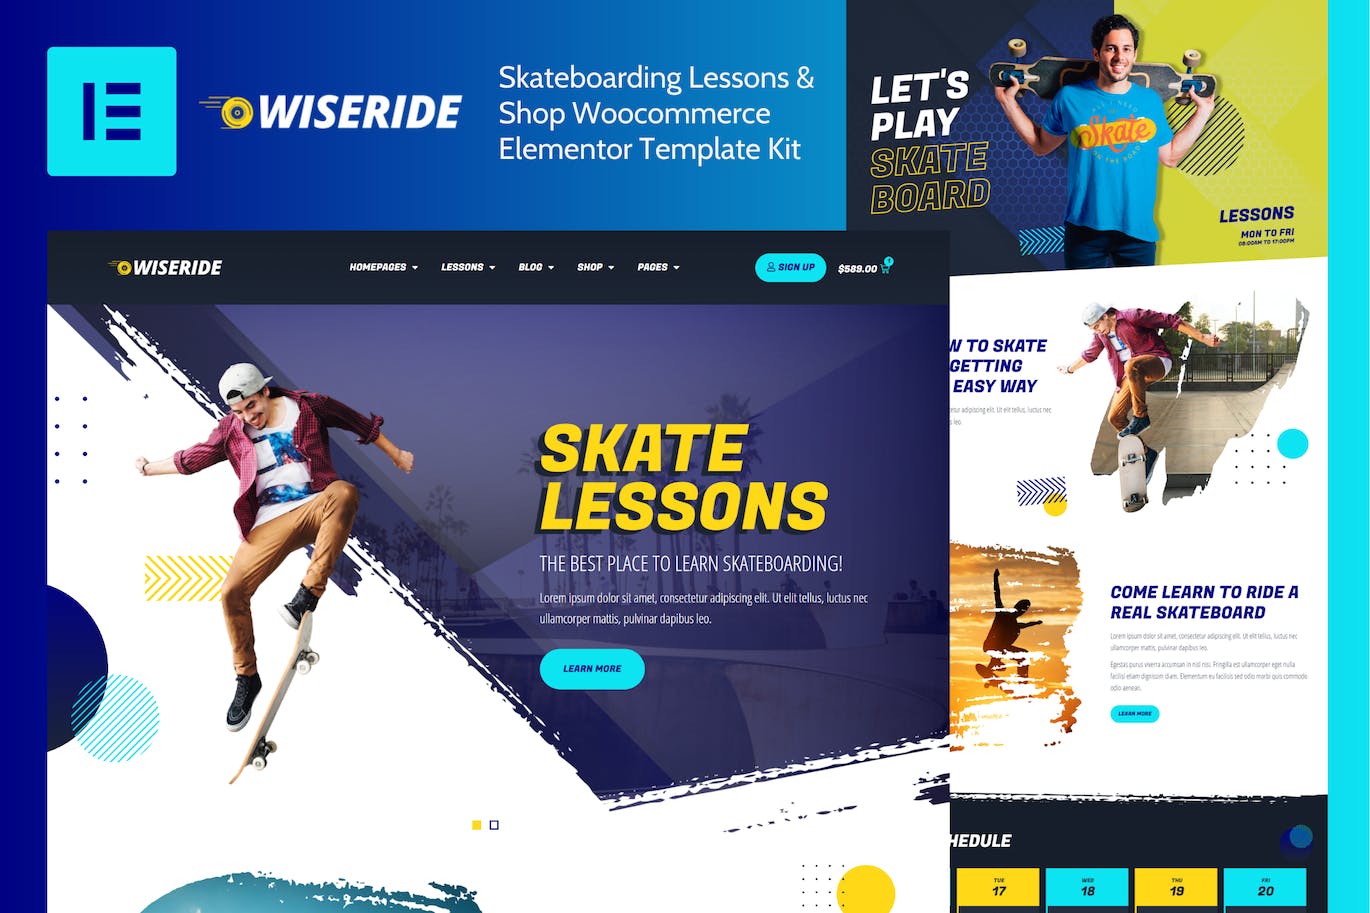 WiseRide - Skateboarding Lessons & Shop Woocommerce Elementor Template Kit